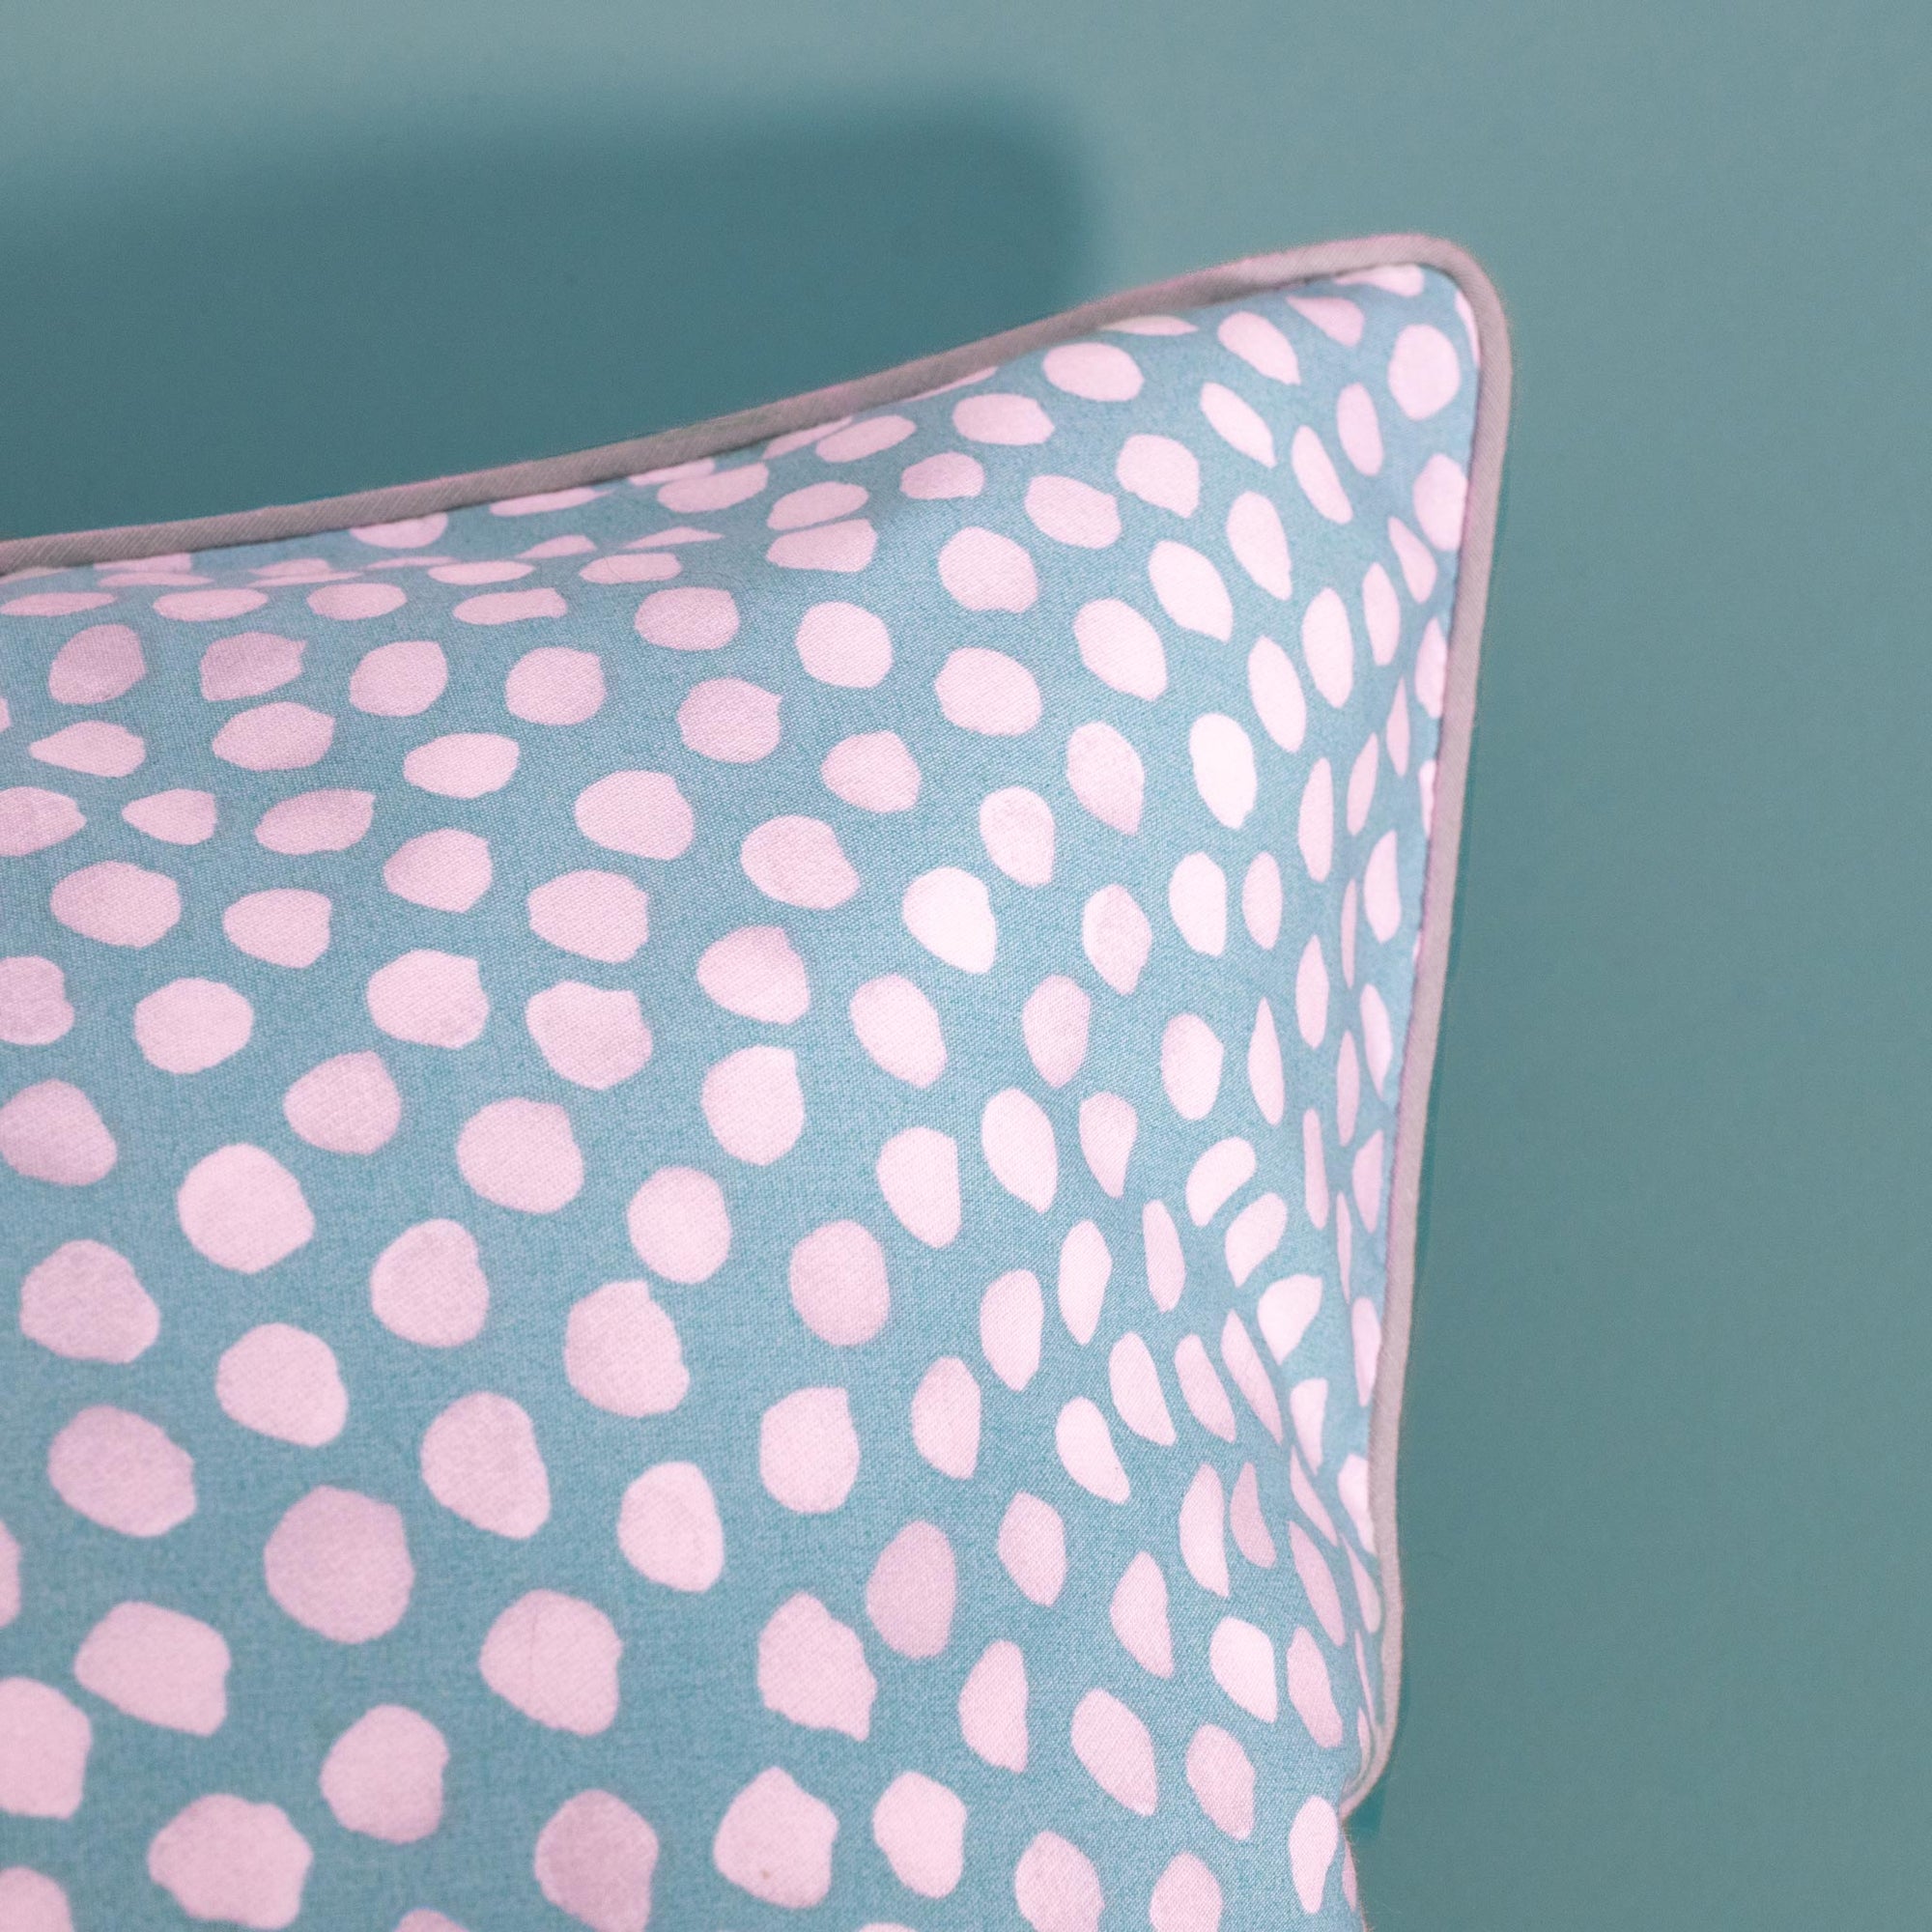 White Spots Blue &amp; Grey Spotty Polka Dots Pillowcase Bedding Set